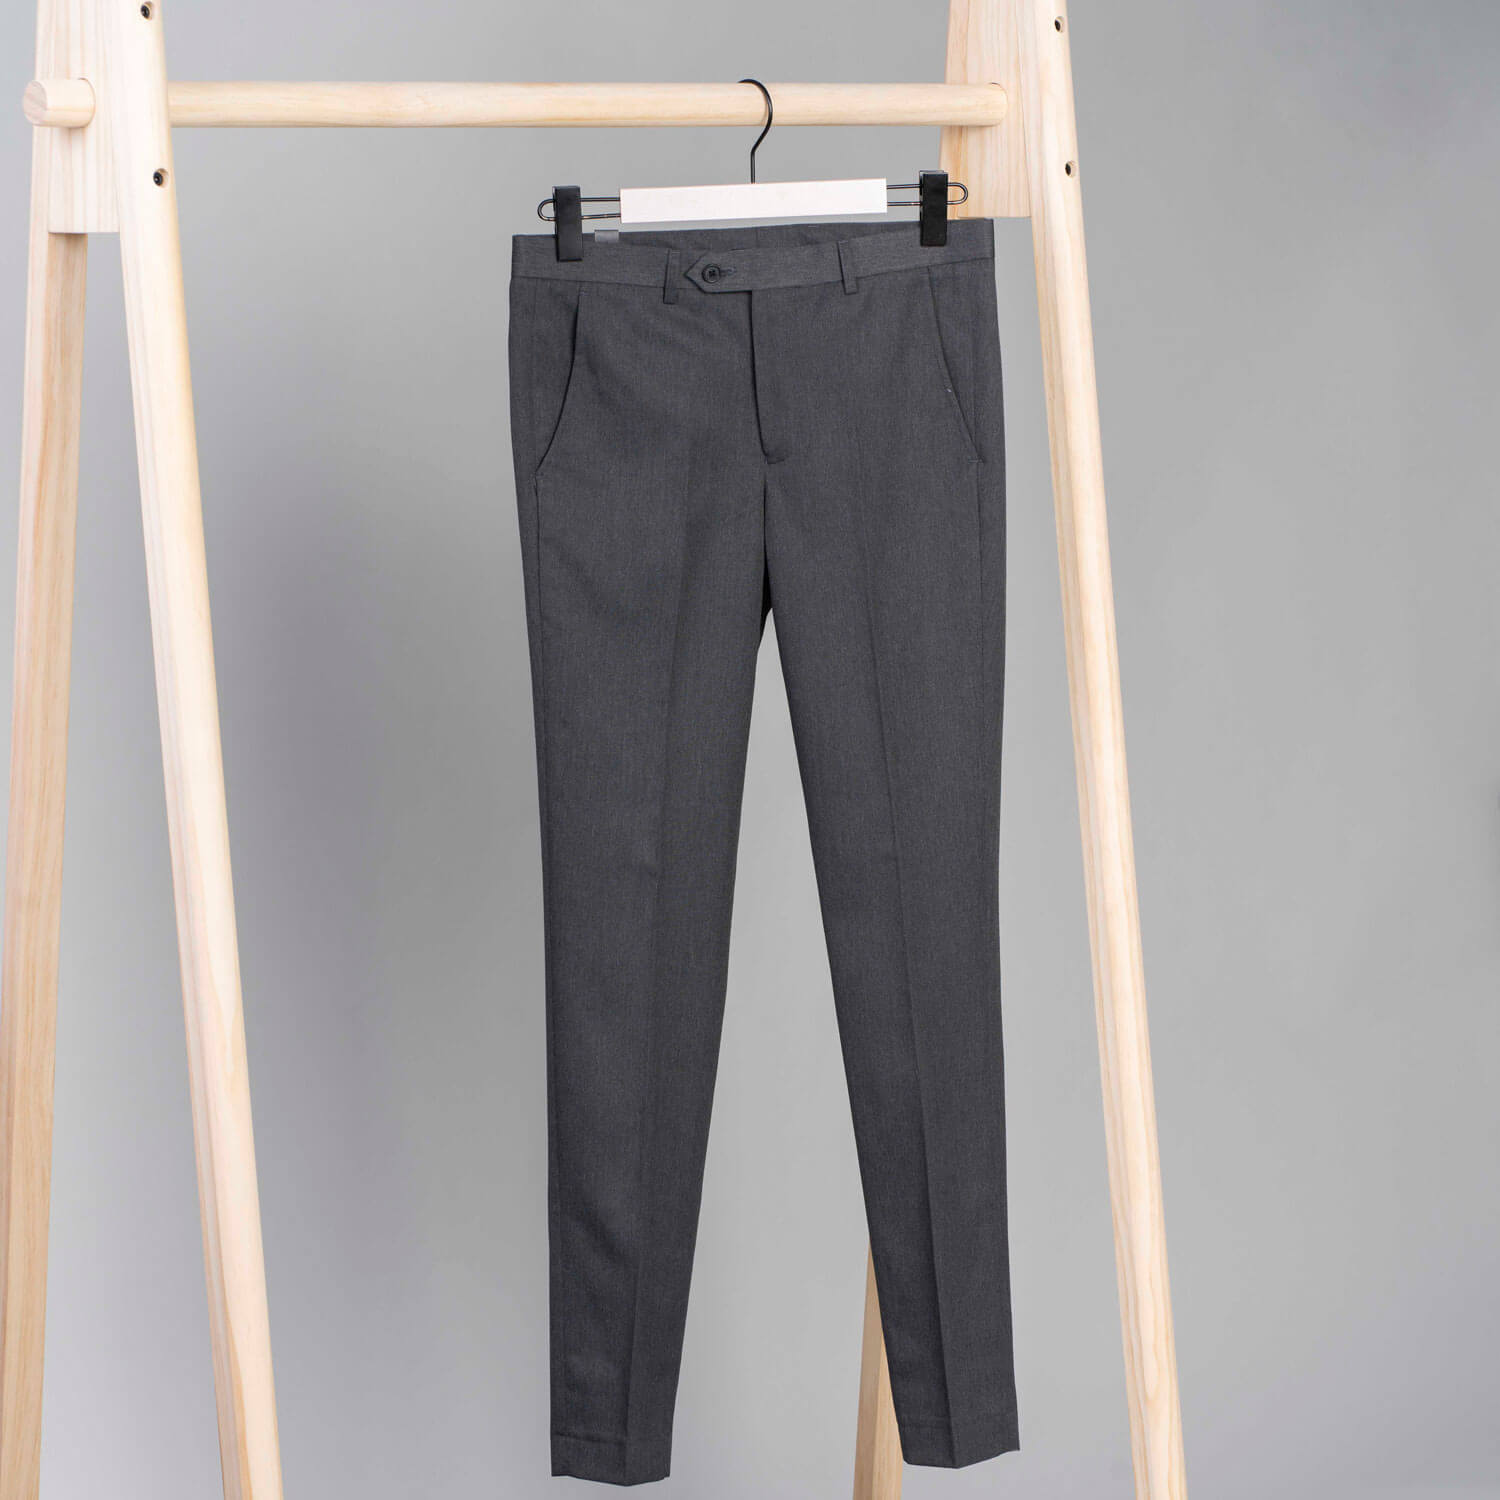 Blue Dot Silva Senior Boys Slimfit Trousers - Grey 1 Shaws Department Stores